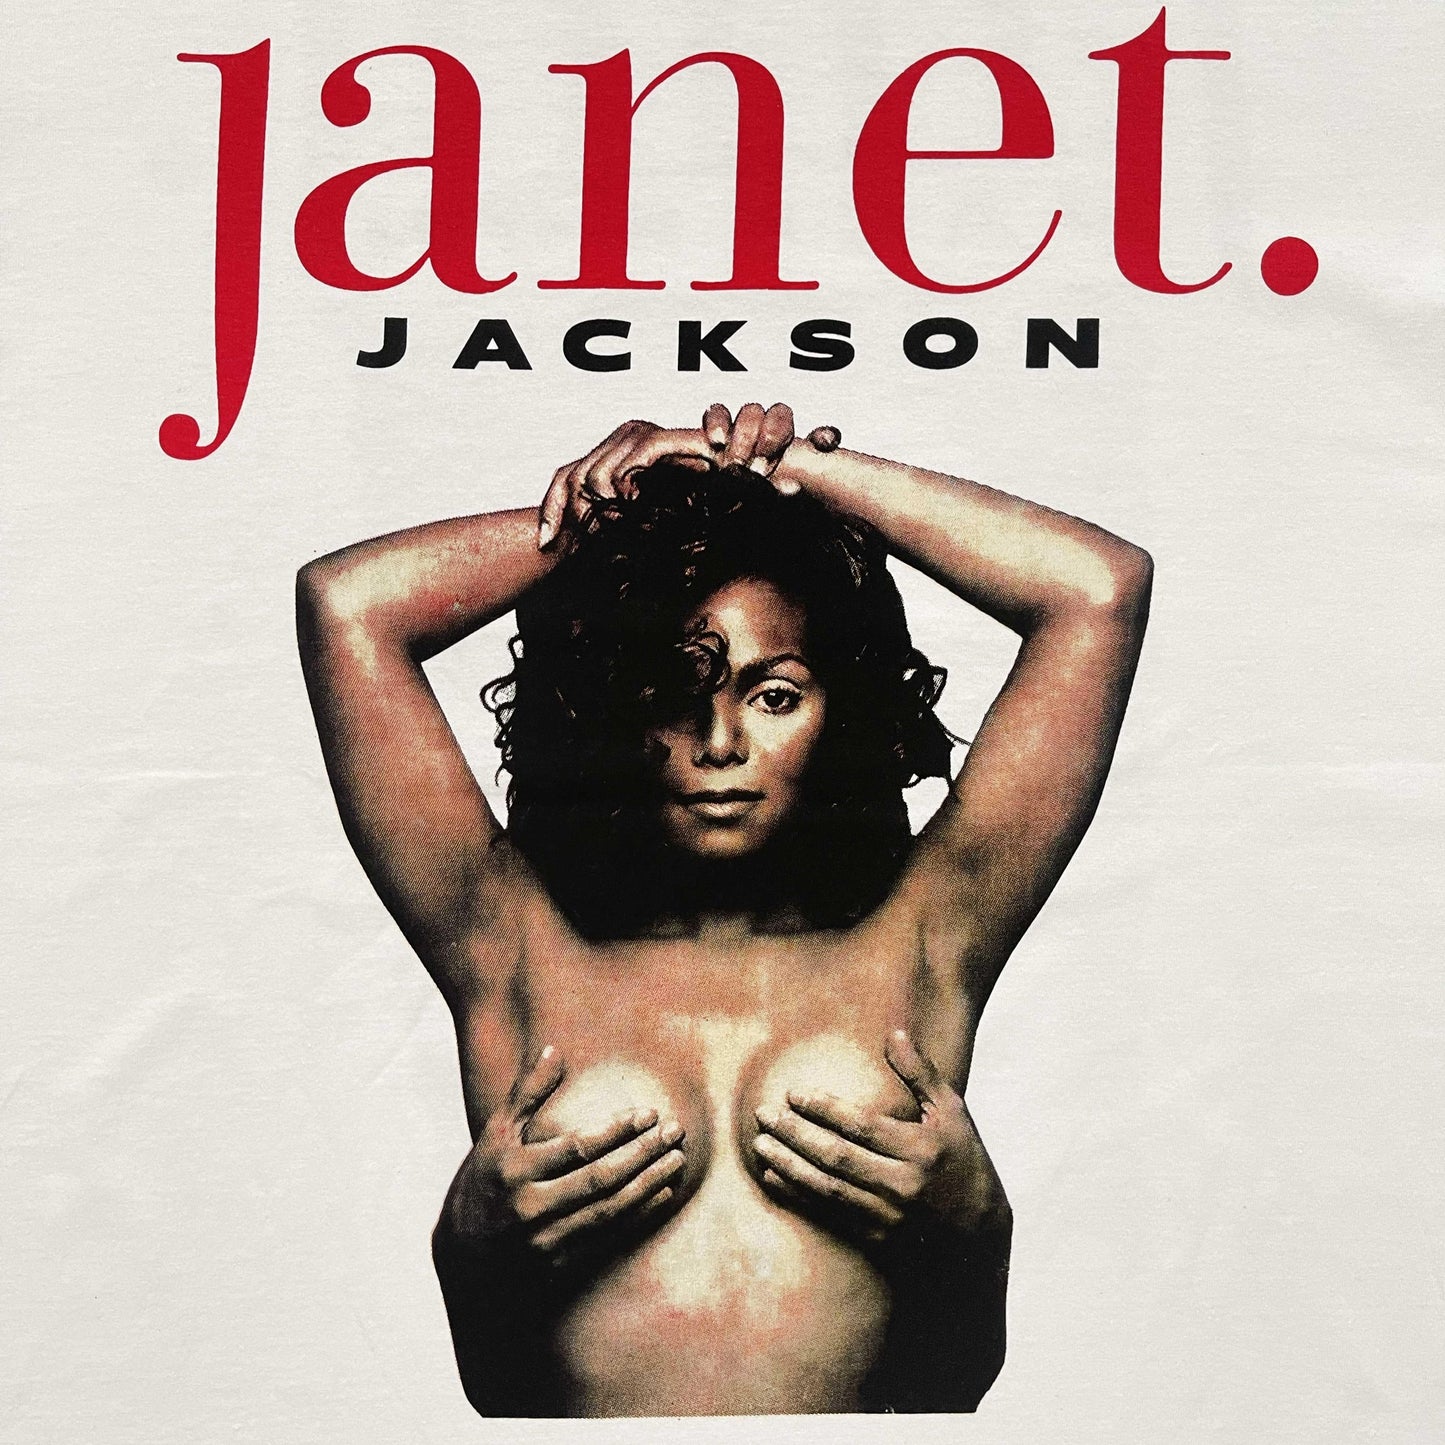 Janet Jackson T-Shirt - XL - Known Source